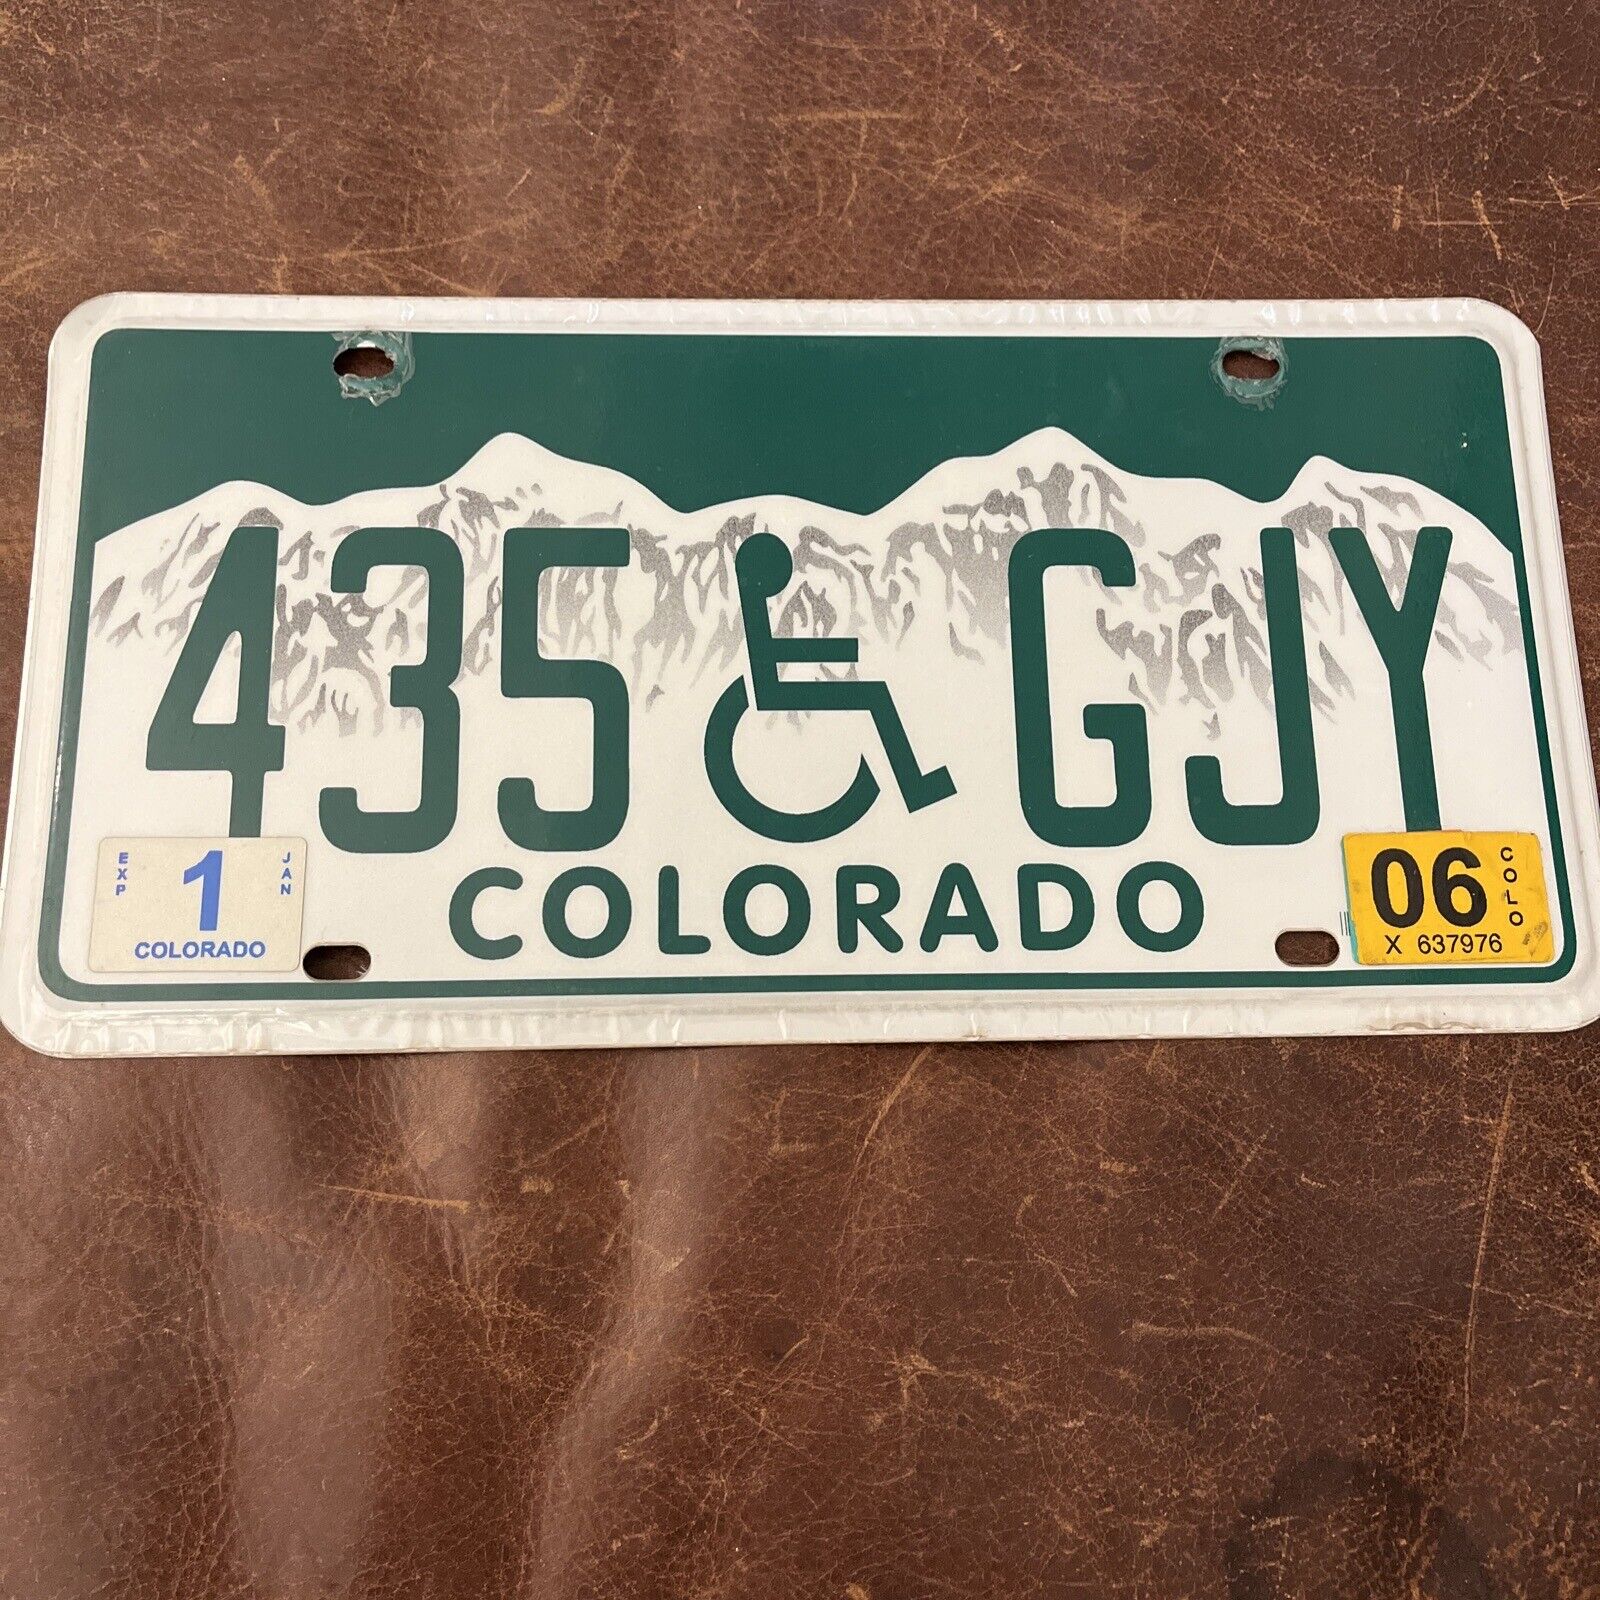 COLORADO Handicap License Plate. 2006 Tag Wheelchair ♿️ # 435 GJY